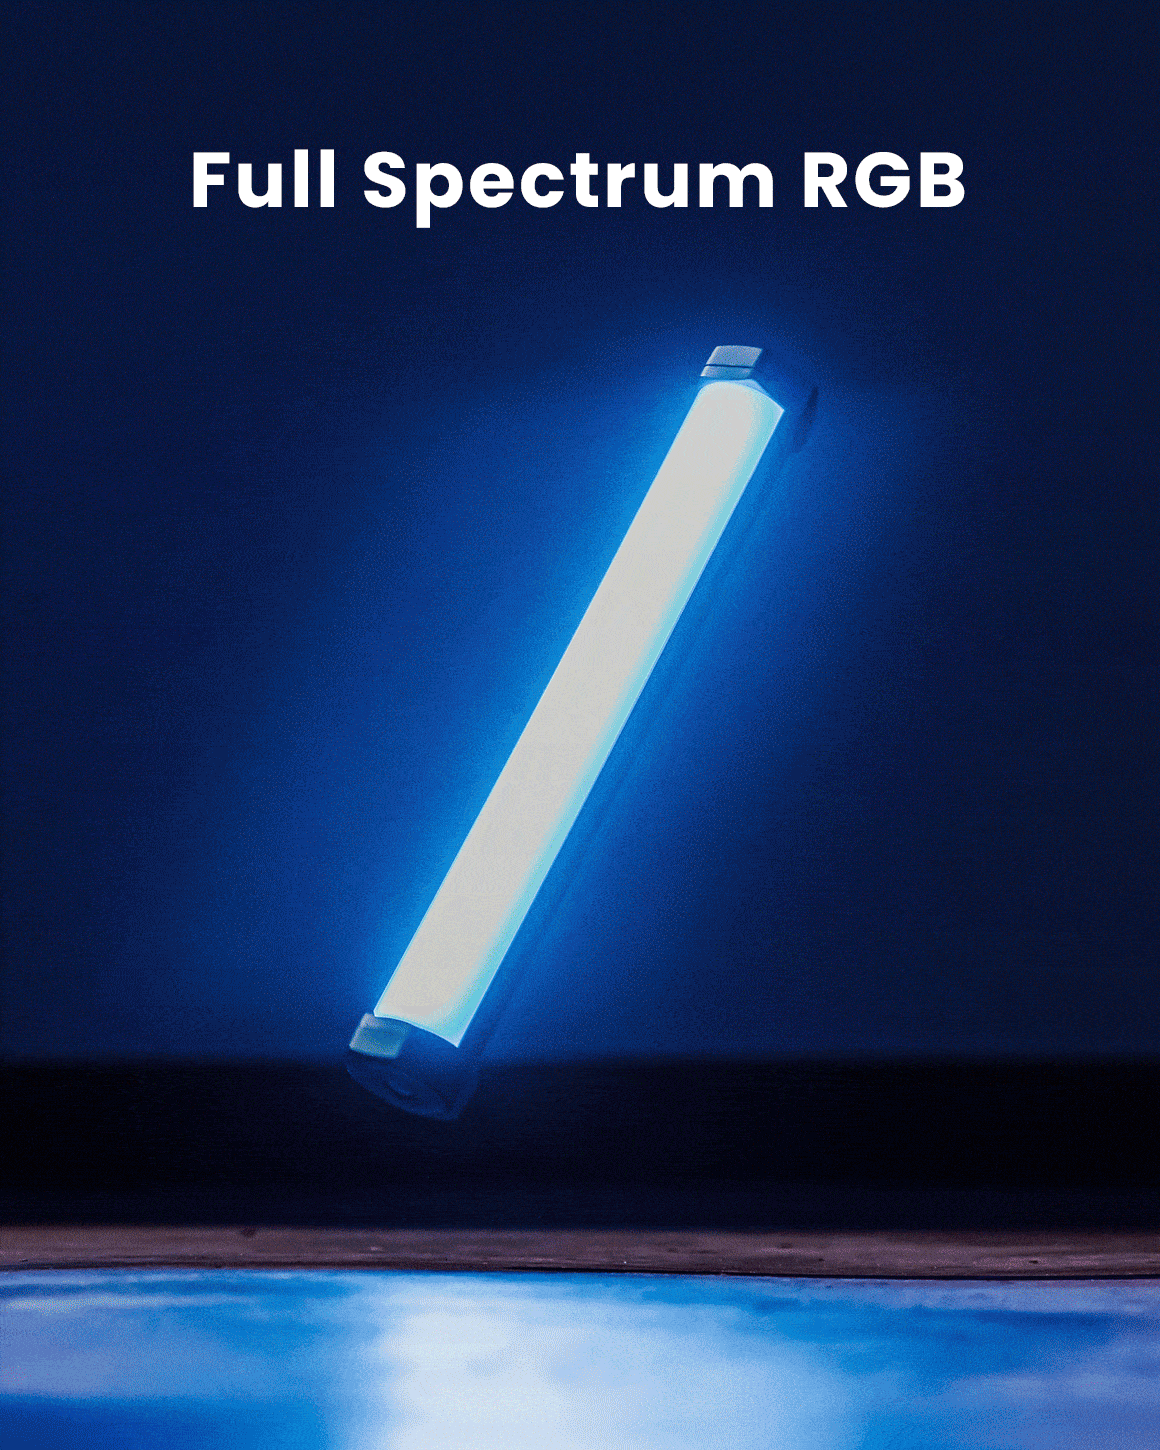 Lume Cube RGB Tube Light Mini 2-Pack App Controlled 1ft. LED Tube Lights